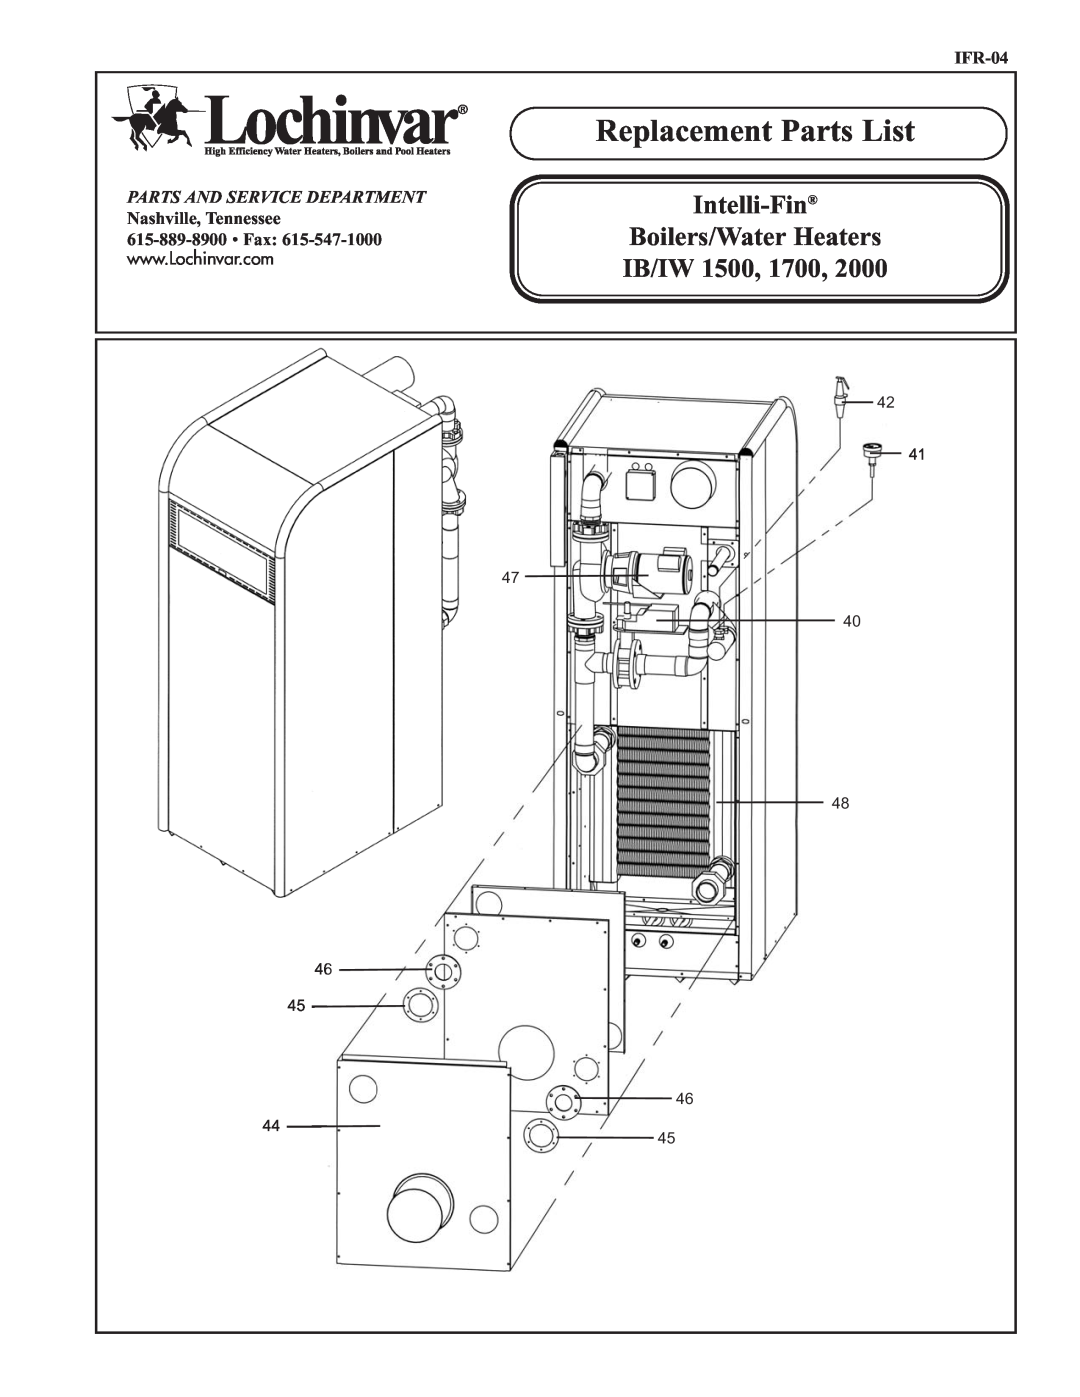 Lochinvar IB/IW 1700, IB/IW 1500 manual Replacement Parts List, Intelli-Fin, Ib/Iw, Boilers/Water Heaters, IFR-04 